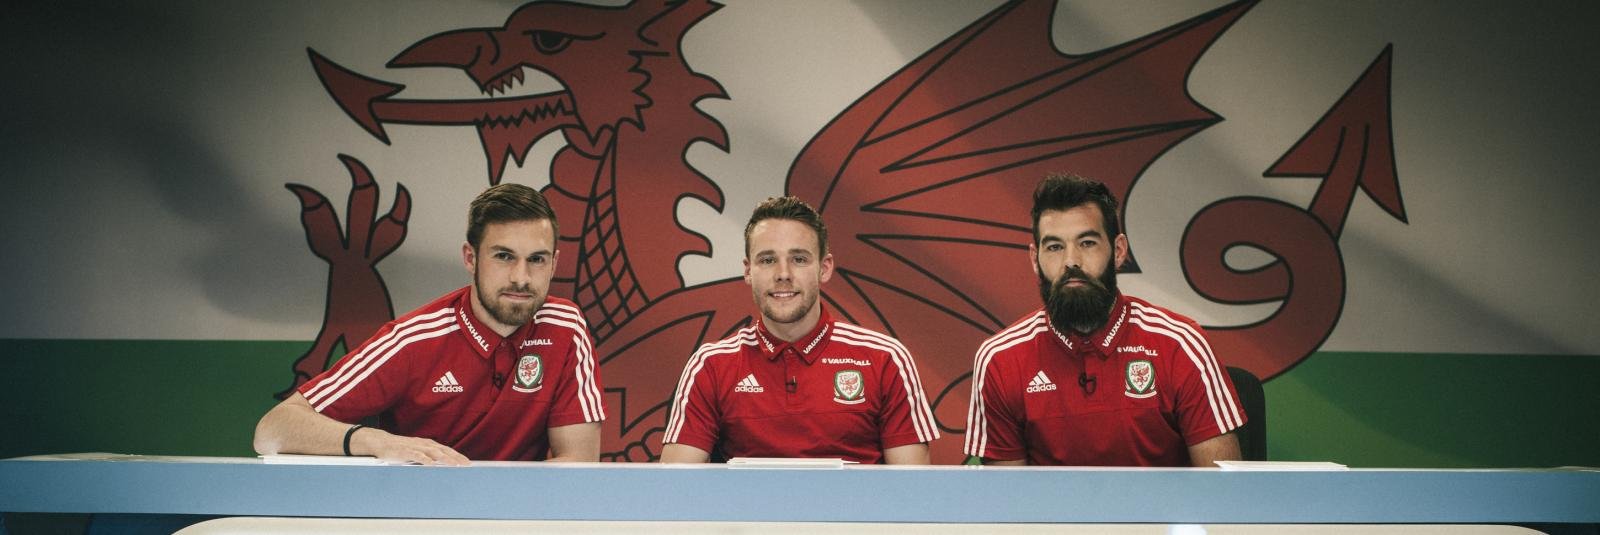 Aaron Ramsey, Joe Ledley and Chris Gunter search for Wales’ EURO 2016 #GetIN goal celebration